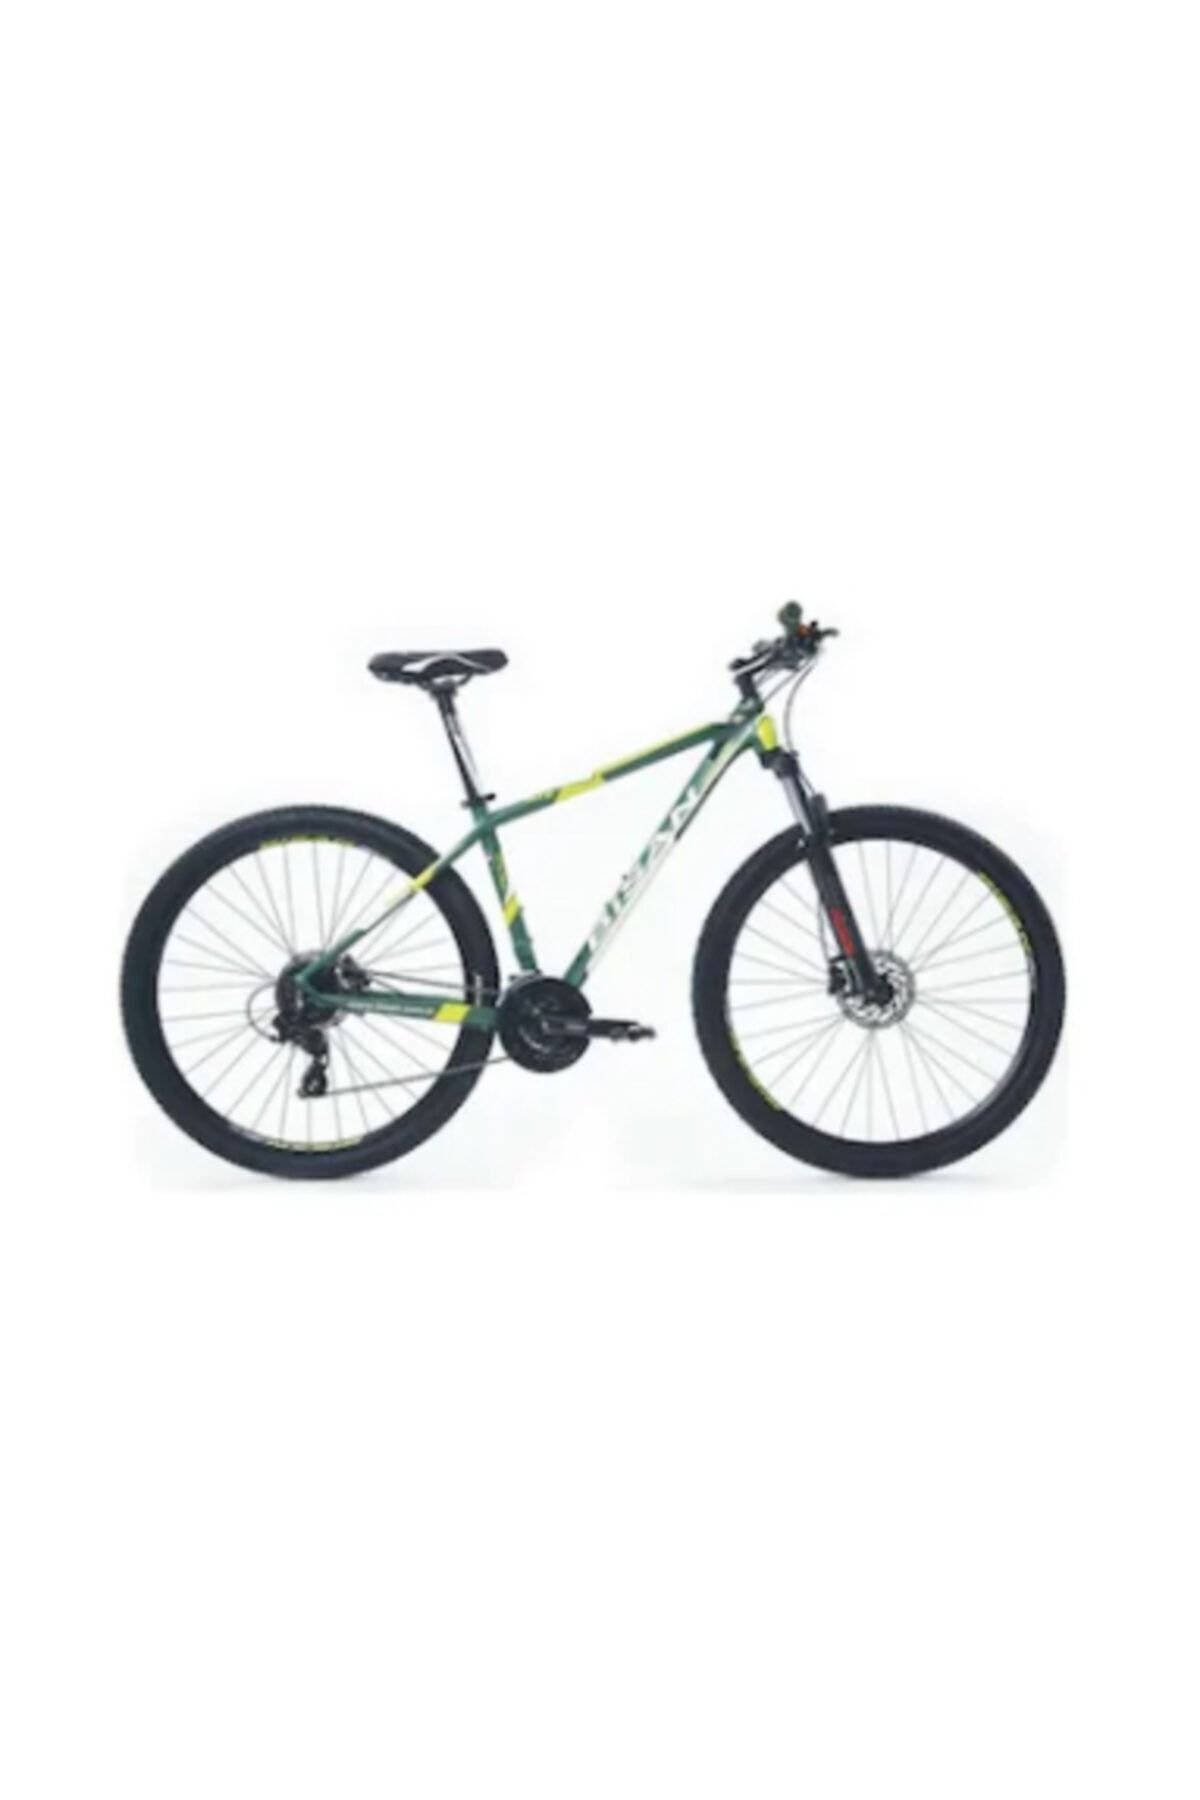 Bisan Mtx 7100 Dağ Bisikleti - 27.5" Jant - Haki Yeşil